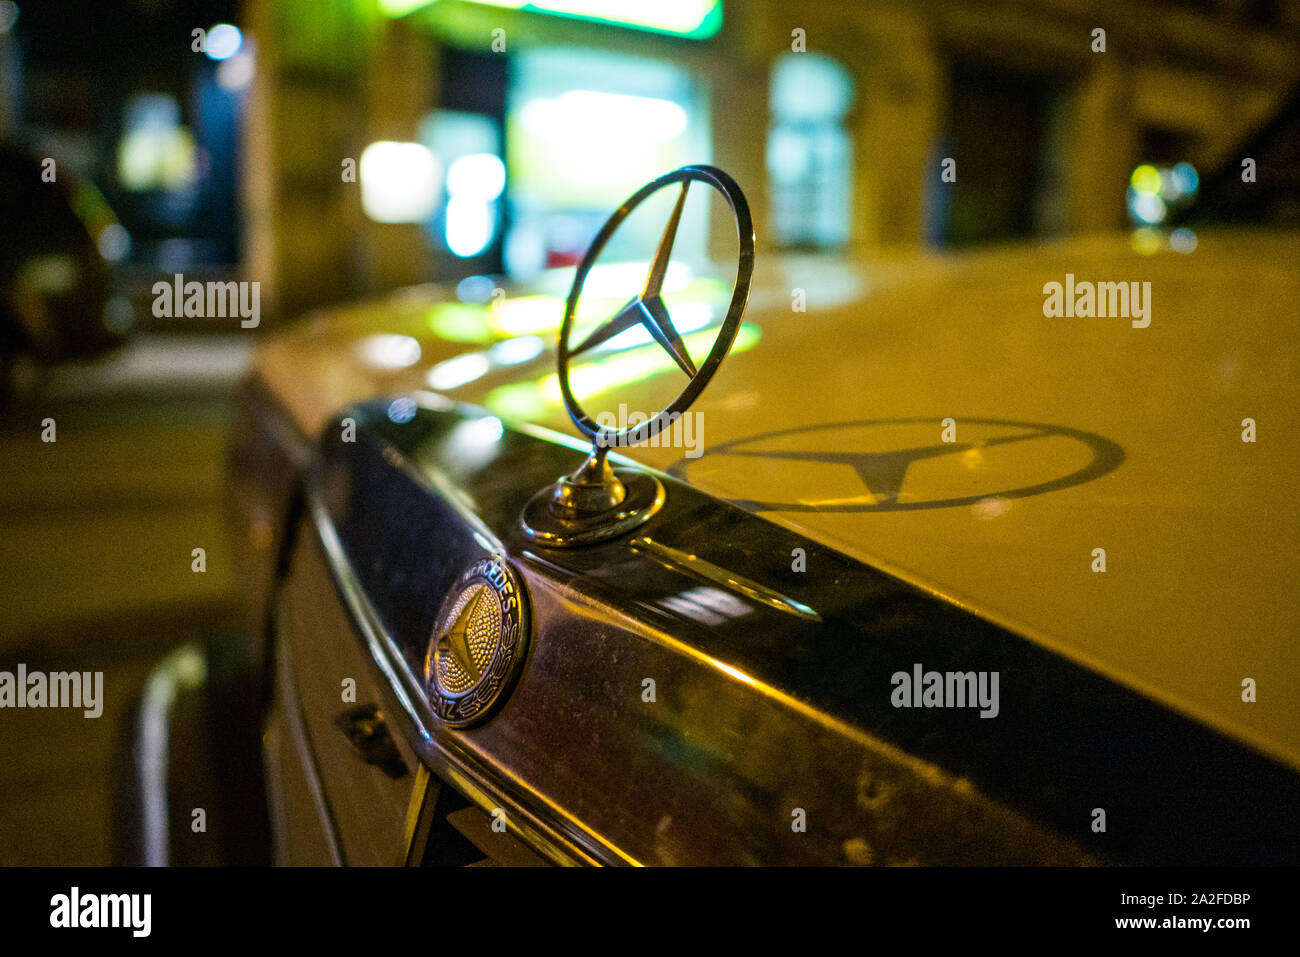 Mercedes Benz Stern emblema Motorhaube Kühlerfigur bei Nacht E-Klasse Parkendes Auto Spätshop Späti parcheggio auto di notte, Deli Shop, Germnay, Auto Benz Foto Stock